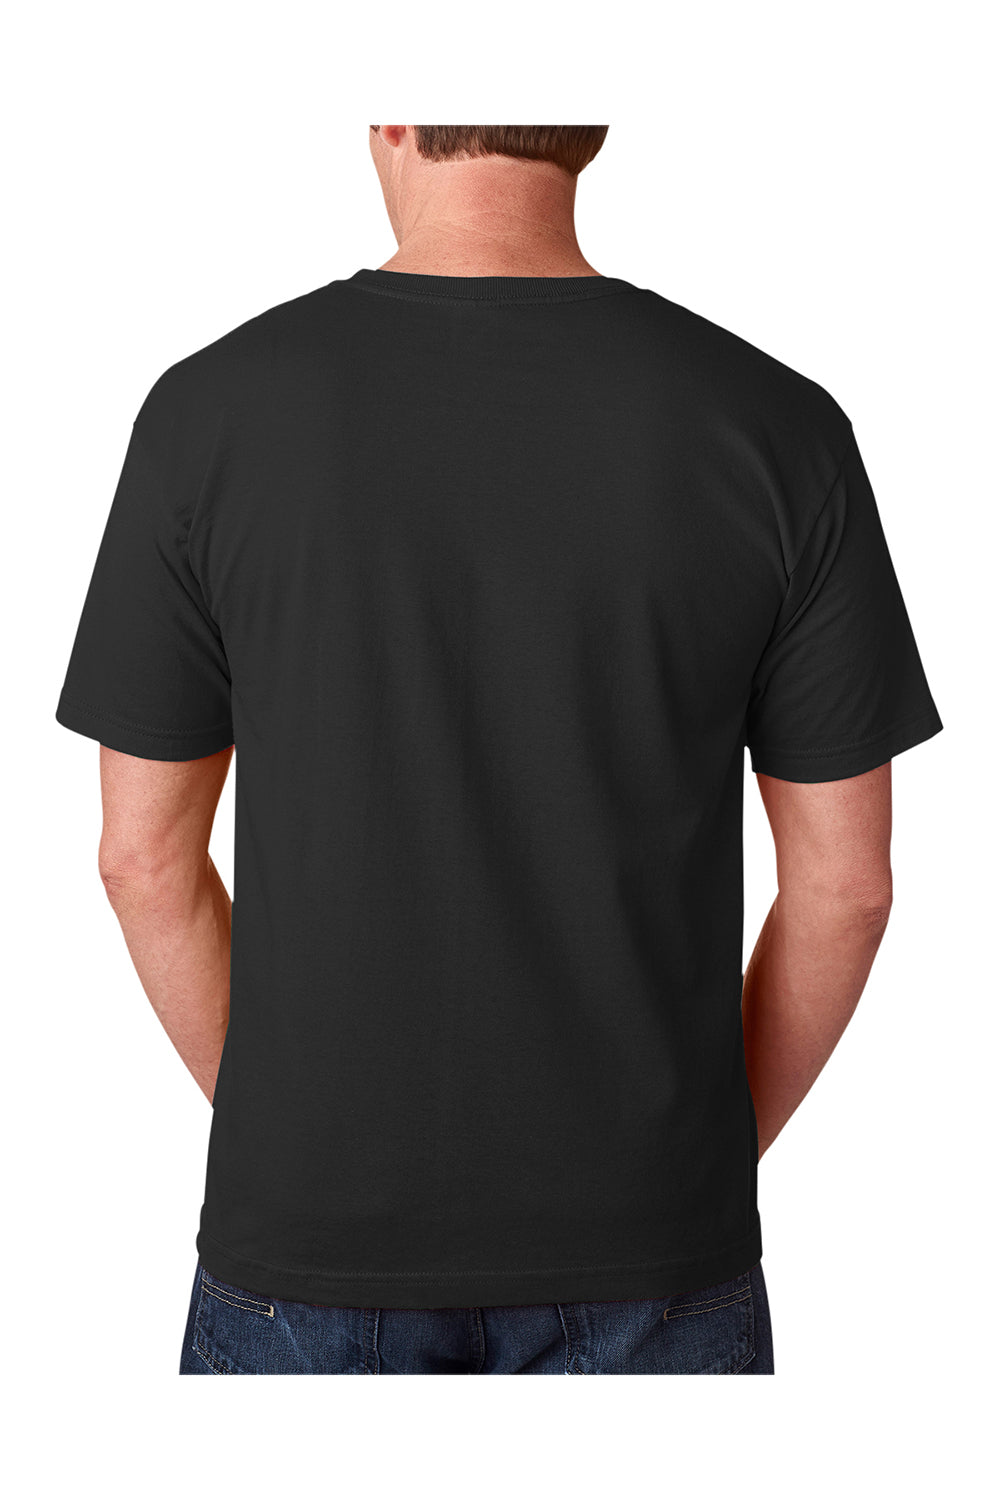 Bayside BA5040 Mens USA Made Short Sleeve Crewneck T-Shirt Black Model Back